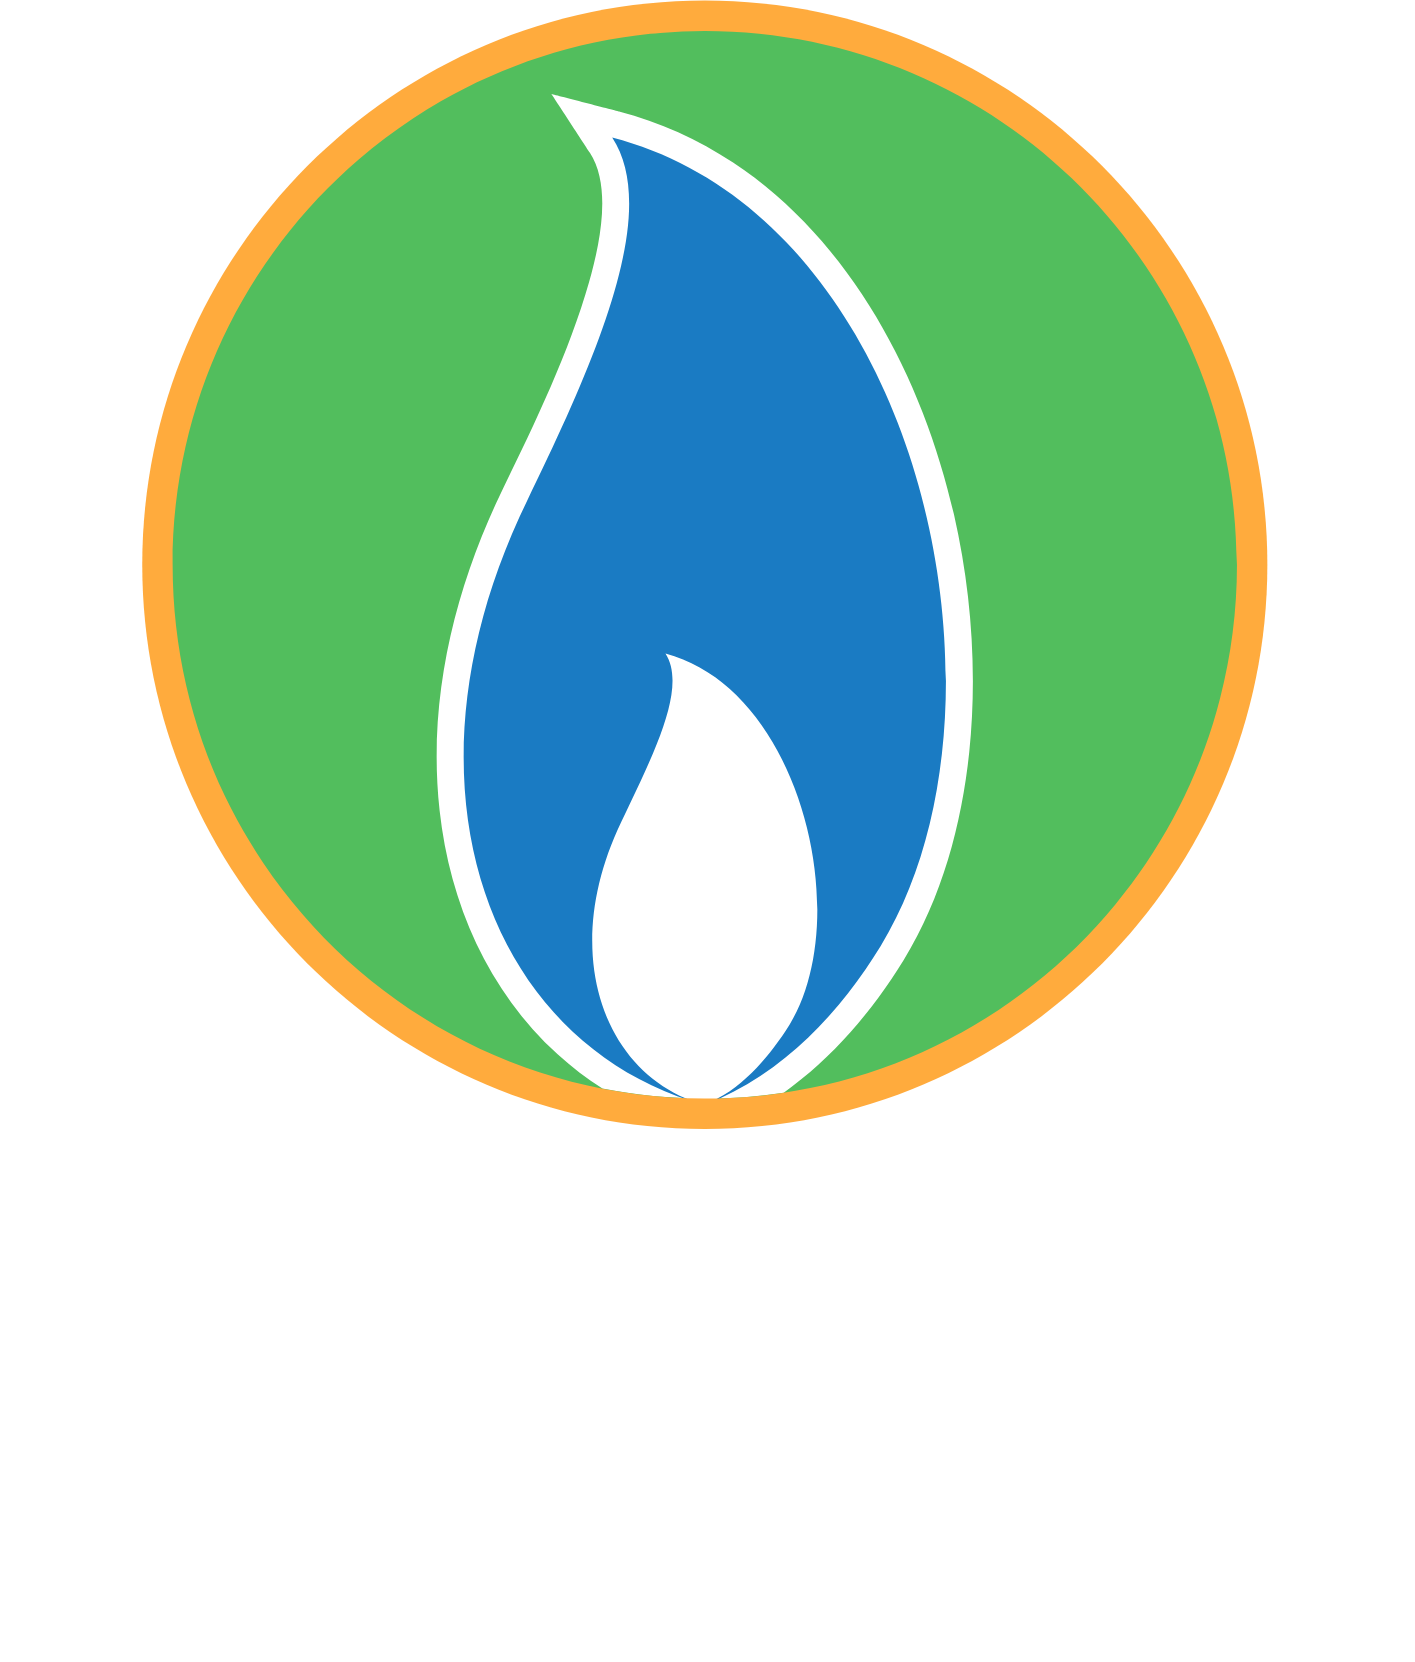 Mahanagar Gas logo large for dark backgrounds (transparent PNG)